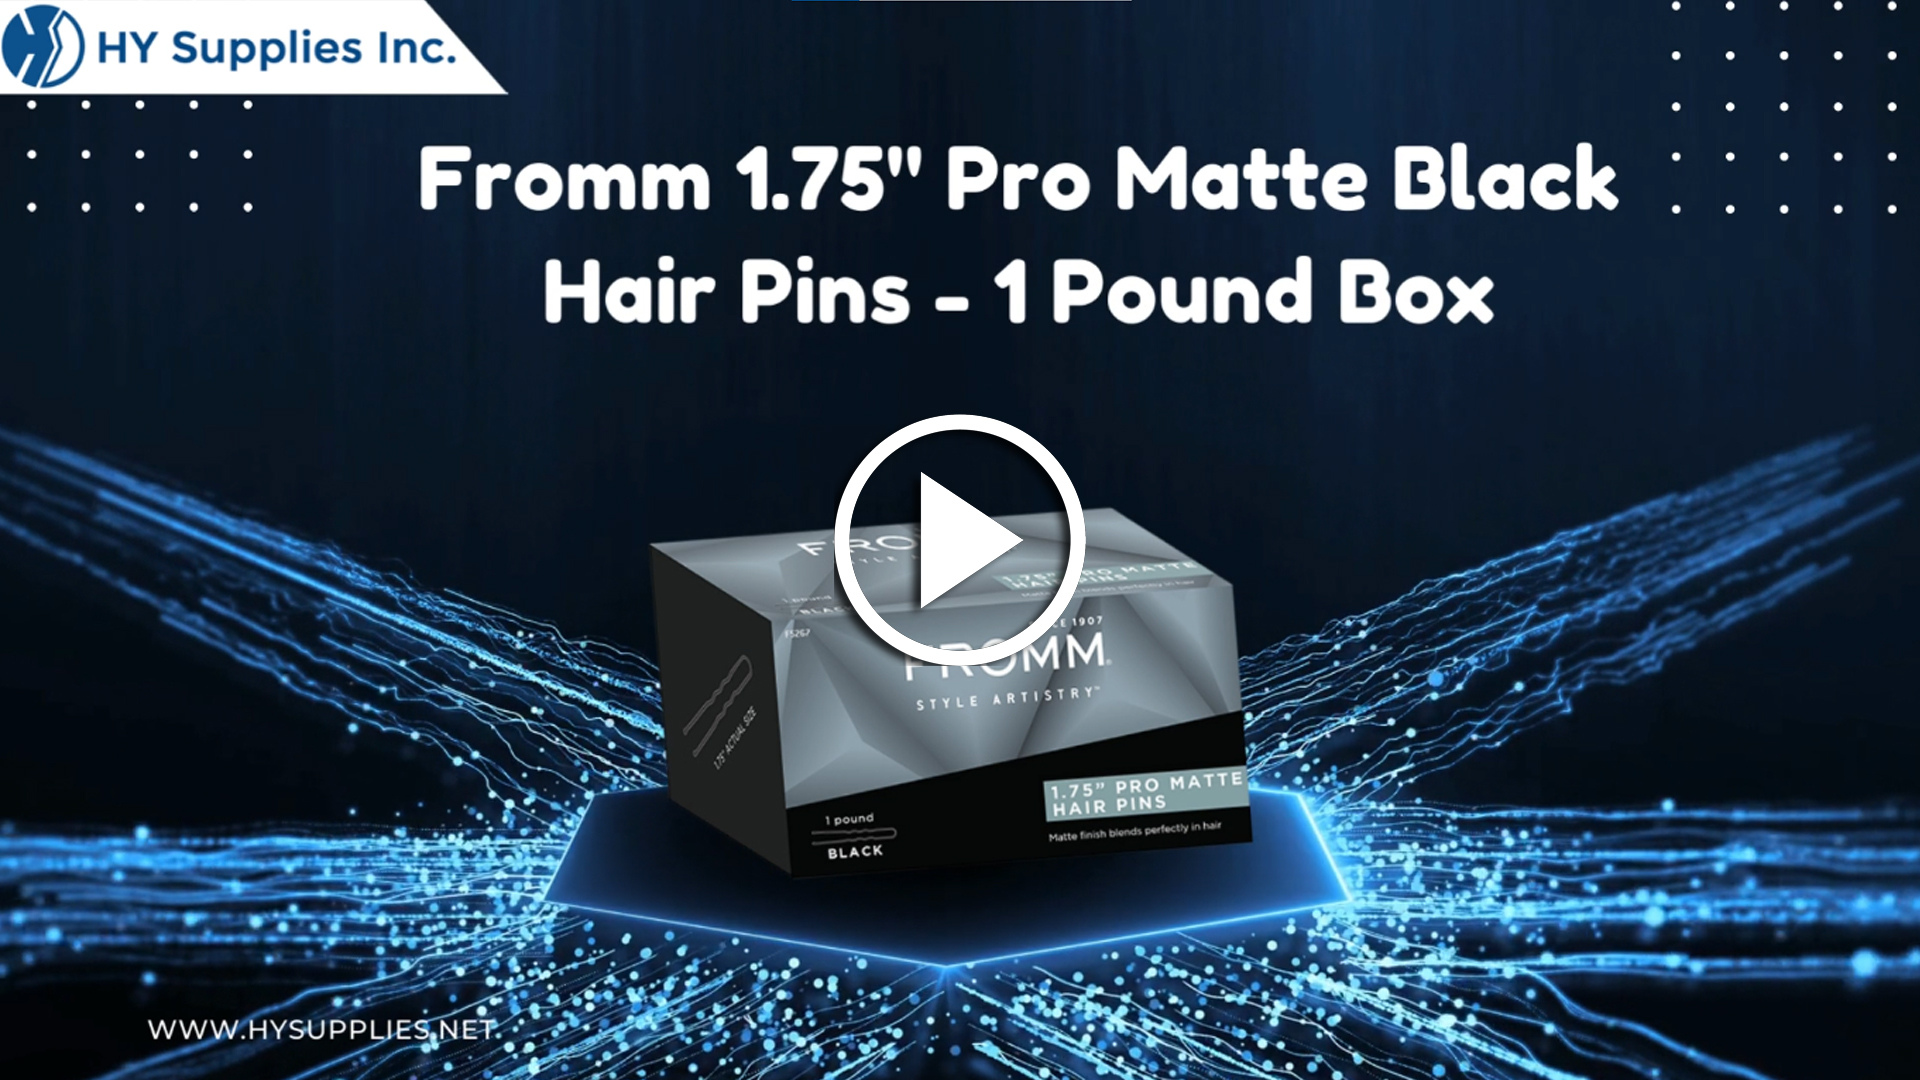 Fromm 1.75"Pro Matte Black Hair Pins - 1 Pound Box